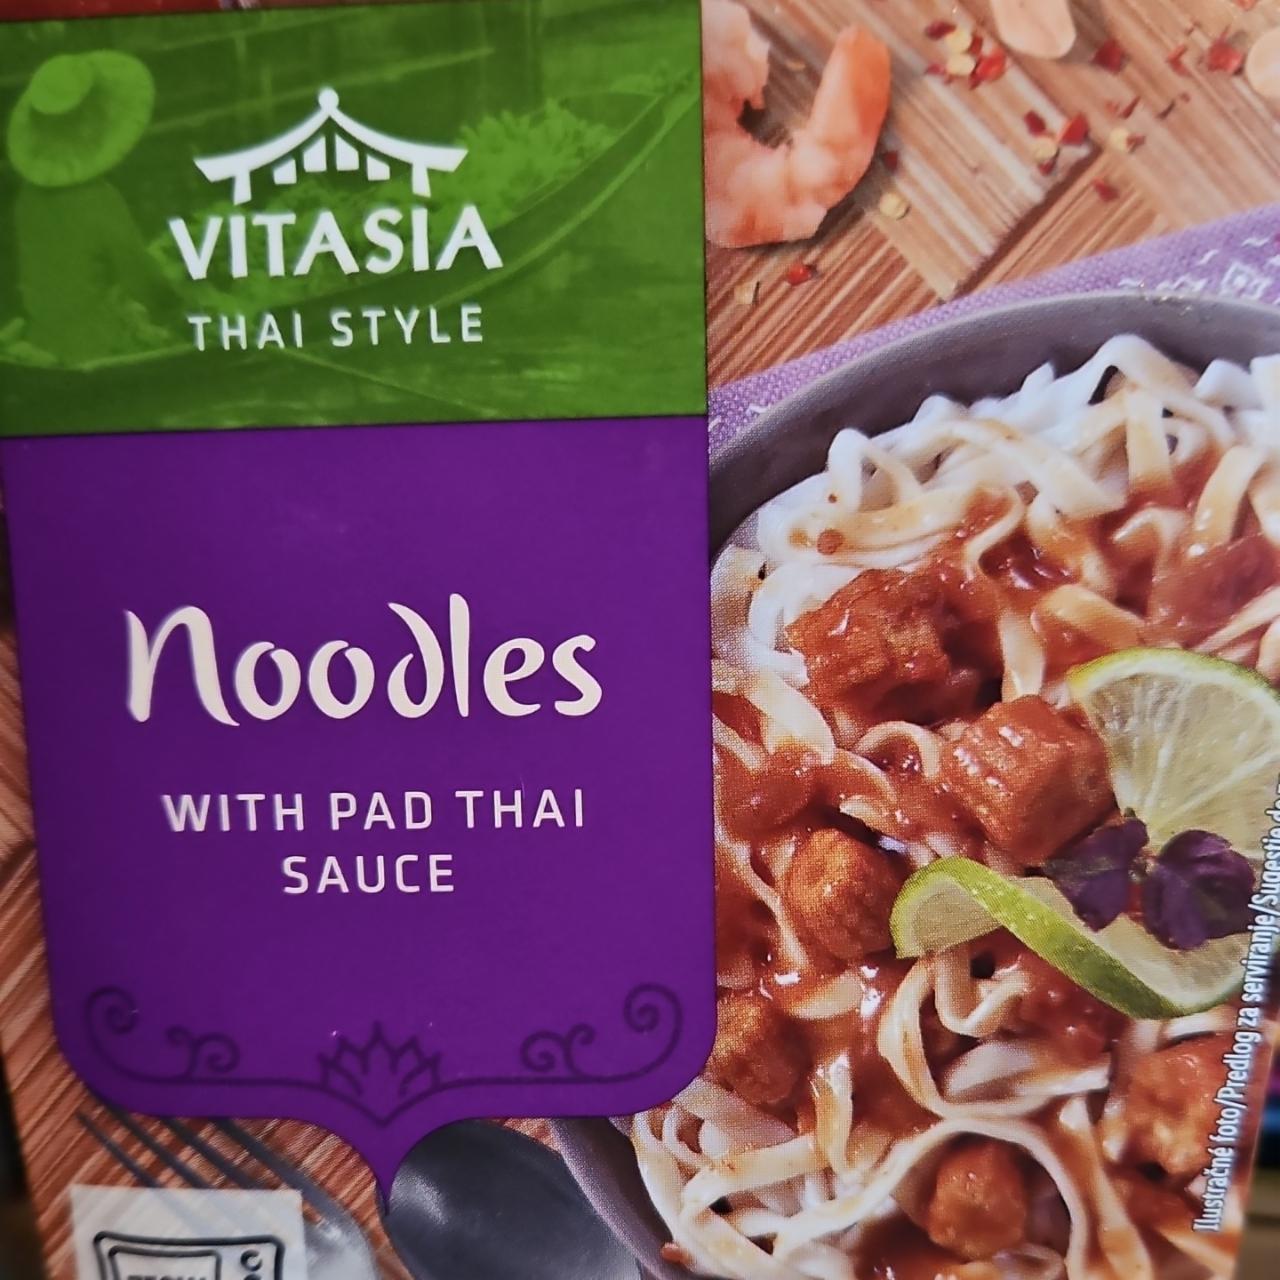 Fotografie - Noodles with pad thai sauce Vitasia